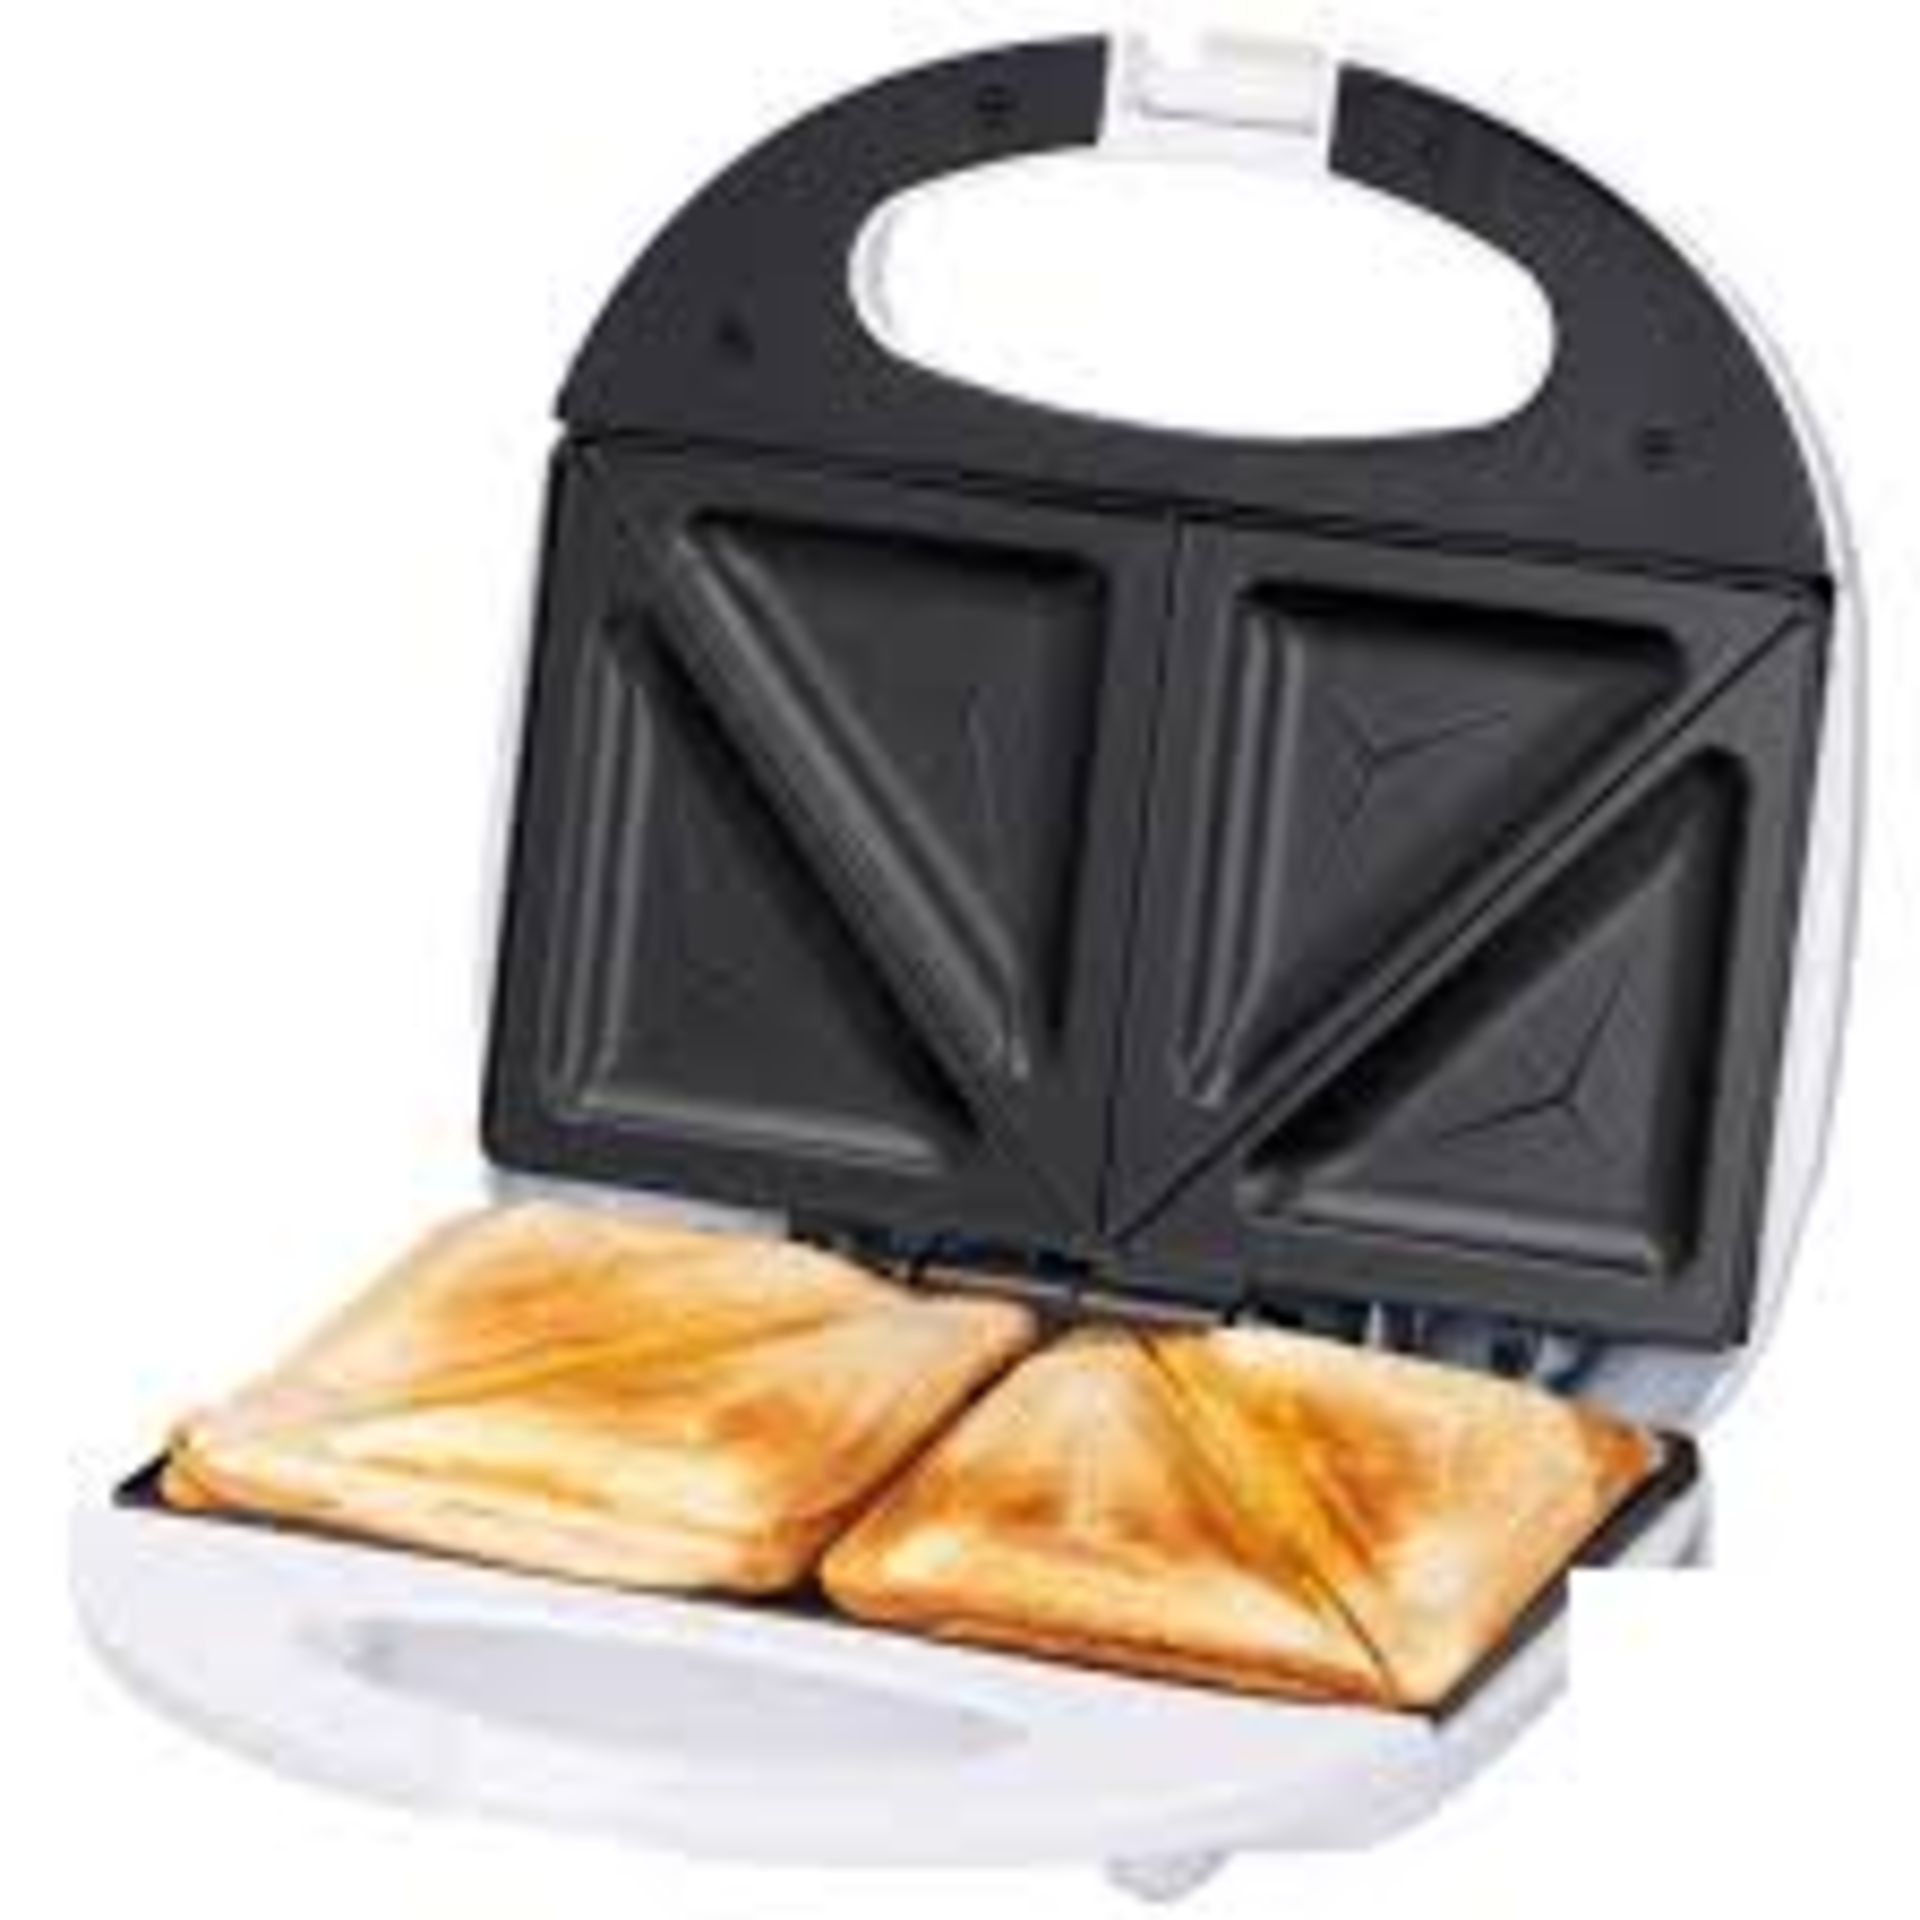 V Brand New Dunlop Sandwich Toaster